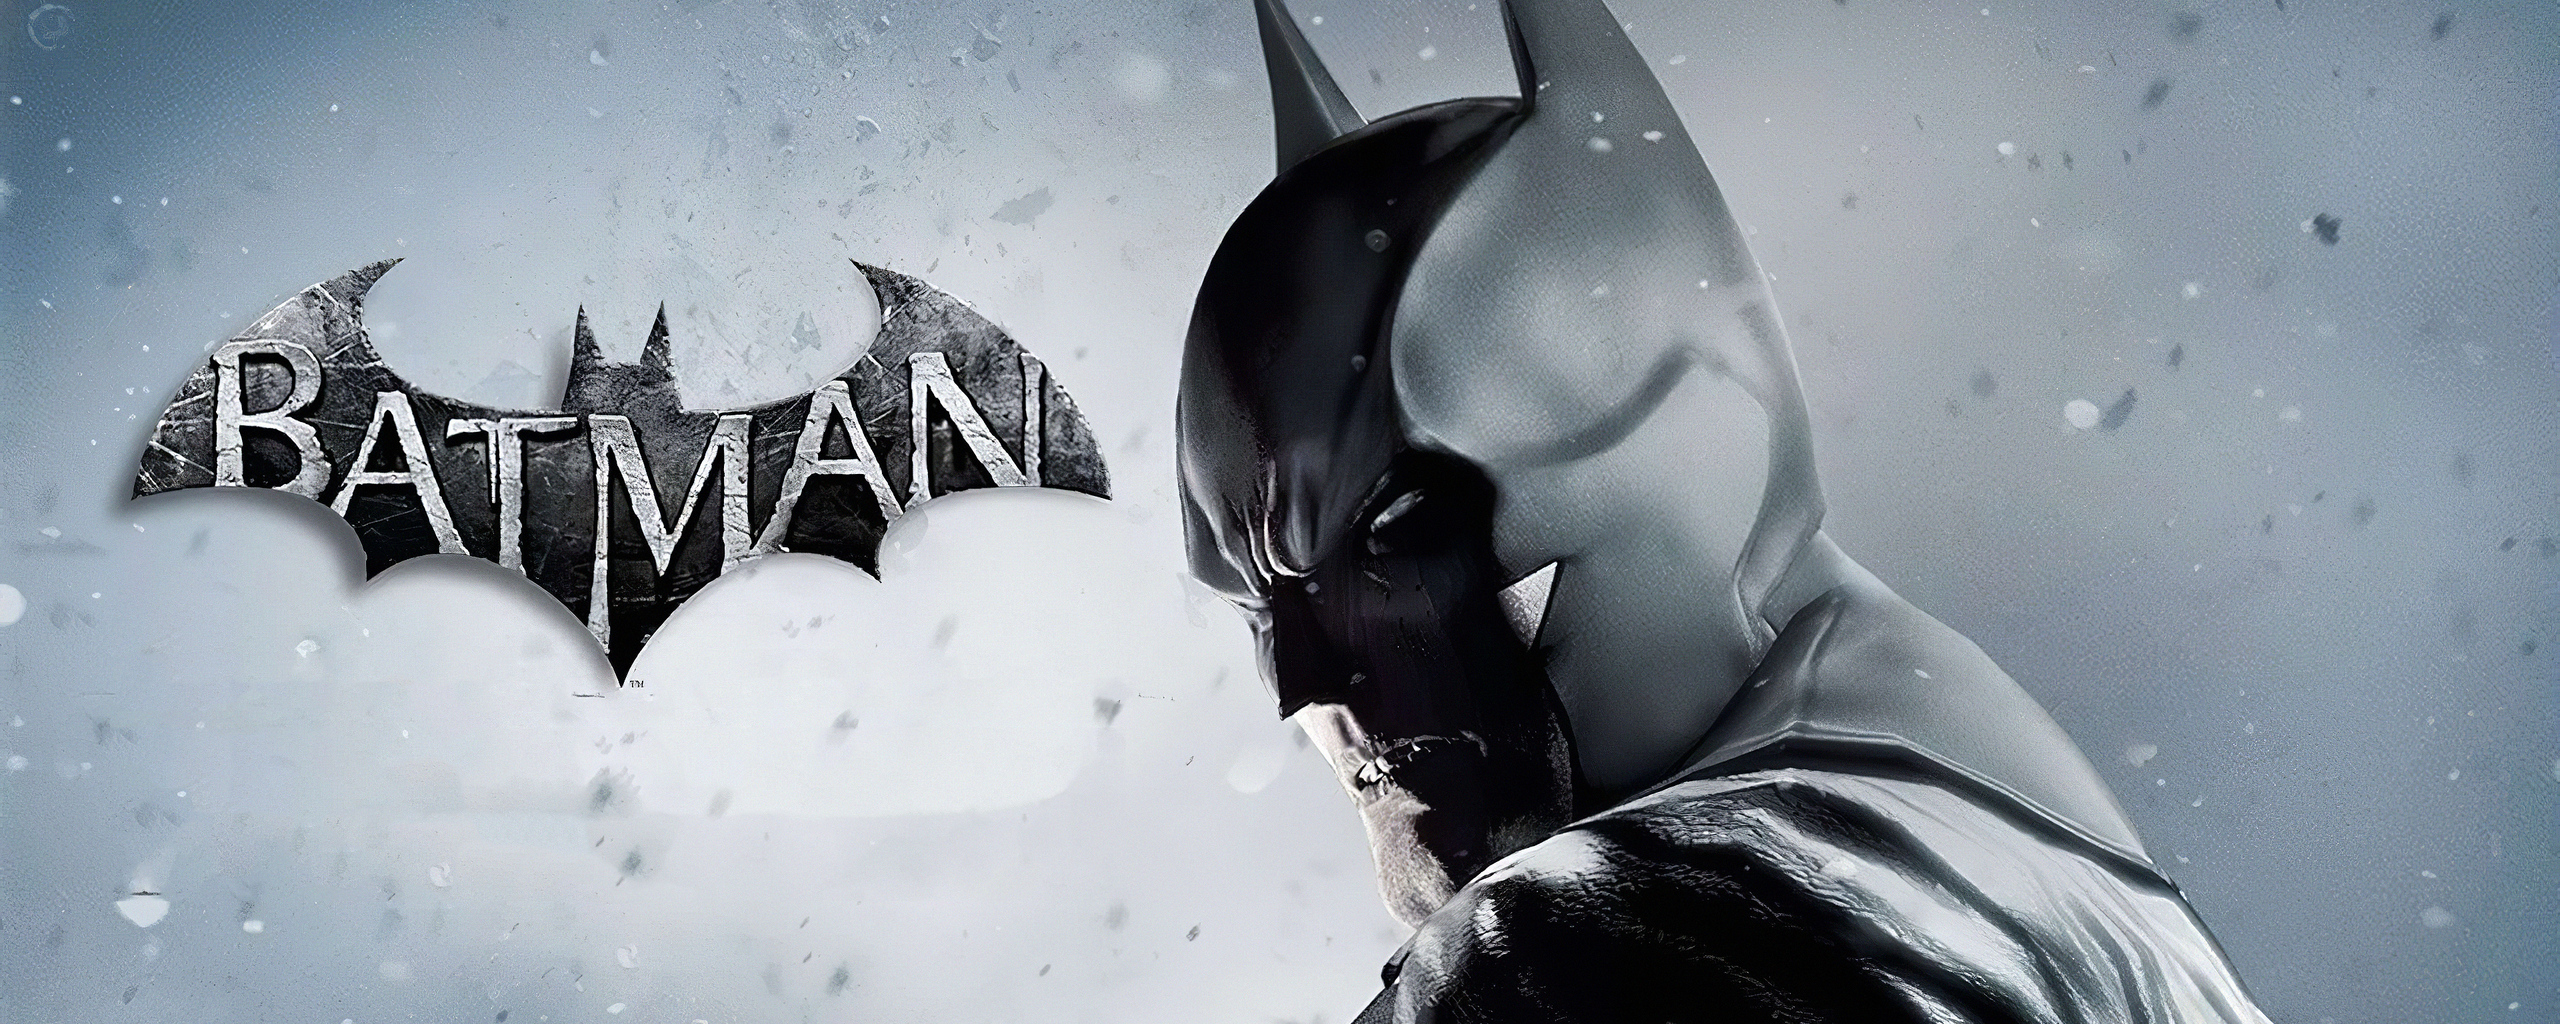 Batman vita. Batman Arkham Origins Бэтмен. Batman™: Arkham Origins Blackgate - Deluxe Edition.